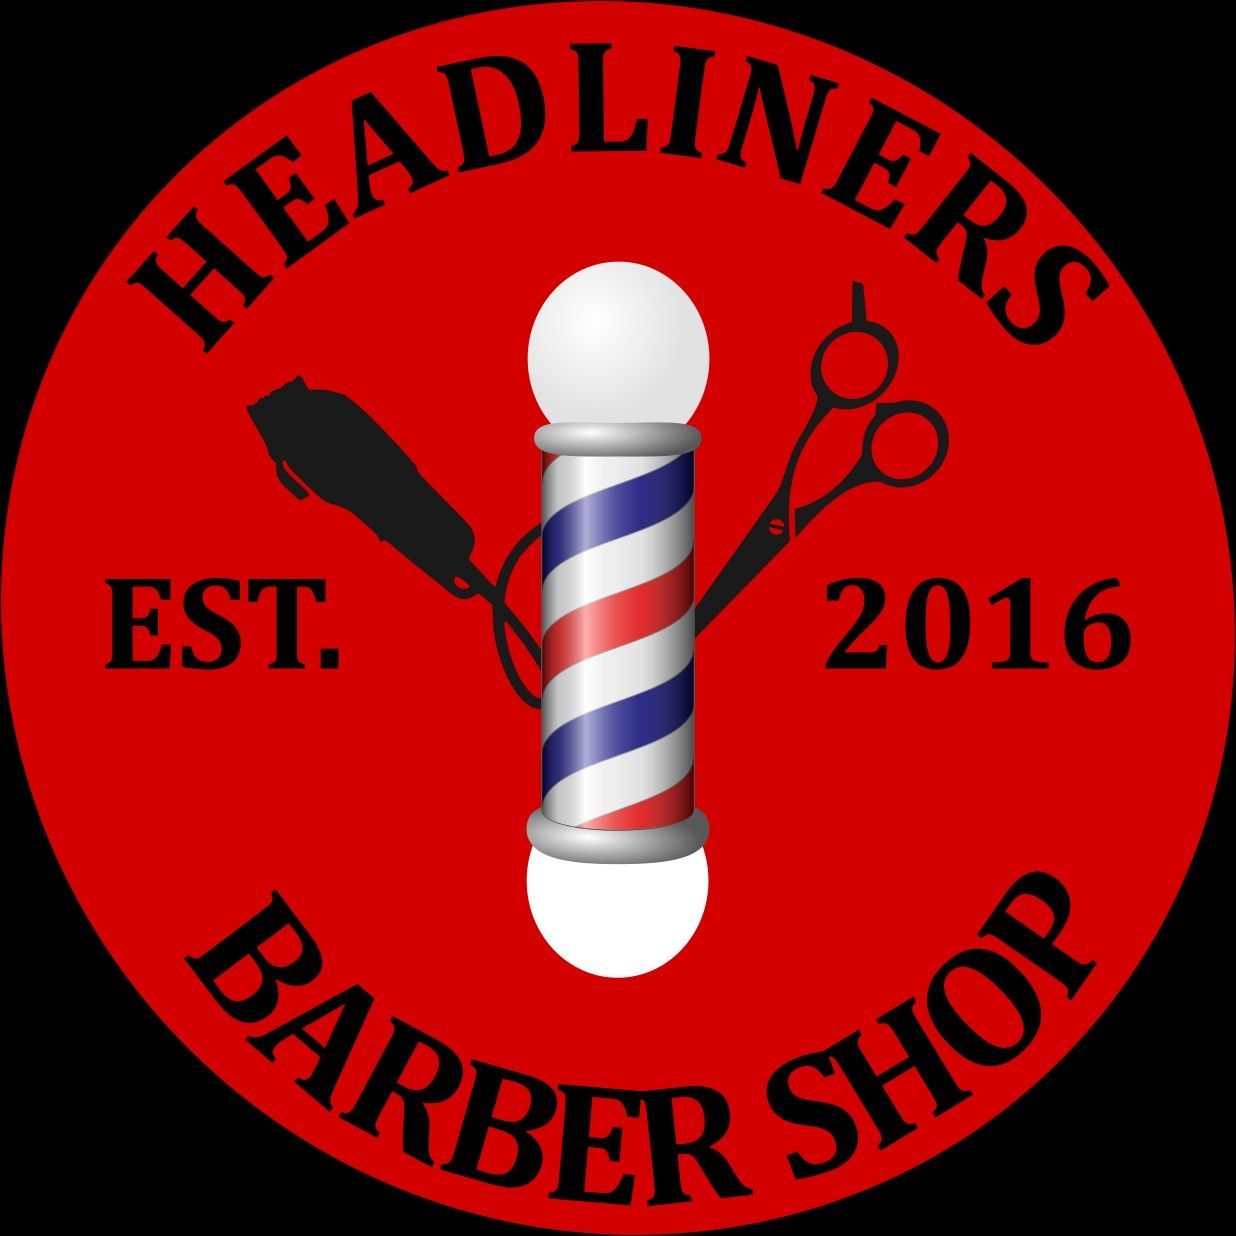 Headliners Barbershop, 2420 Wisteria Dr, Unit 3, Snellville, 30078